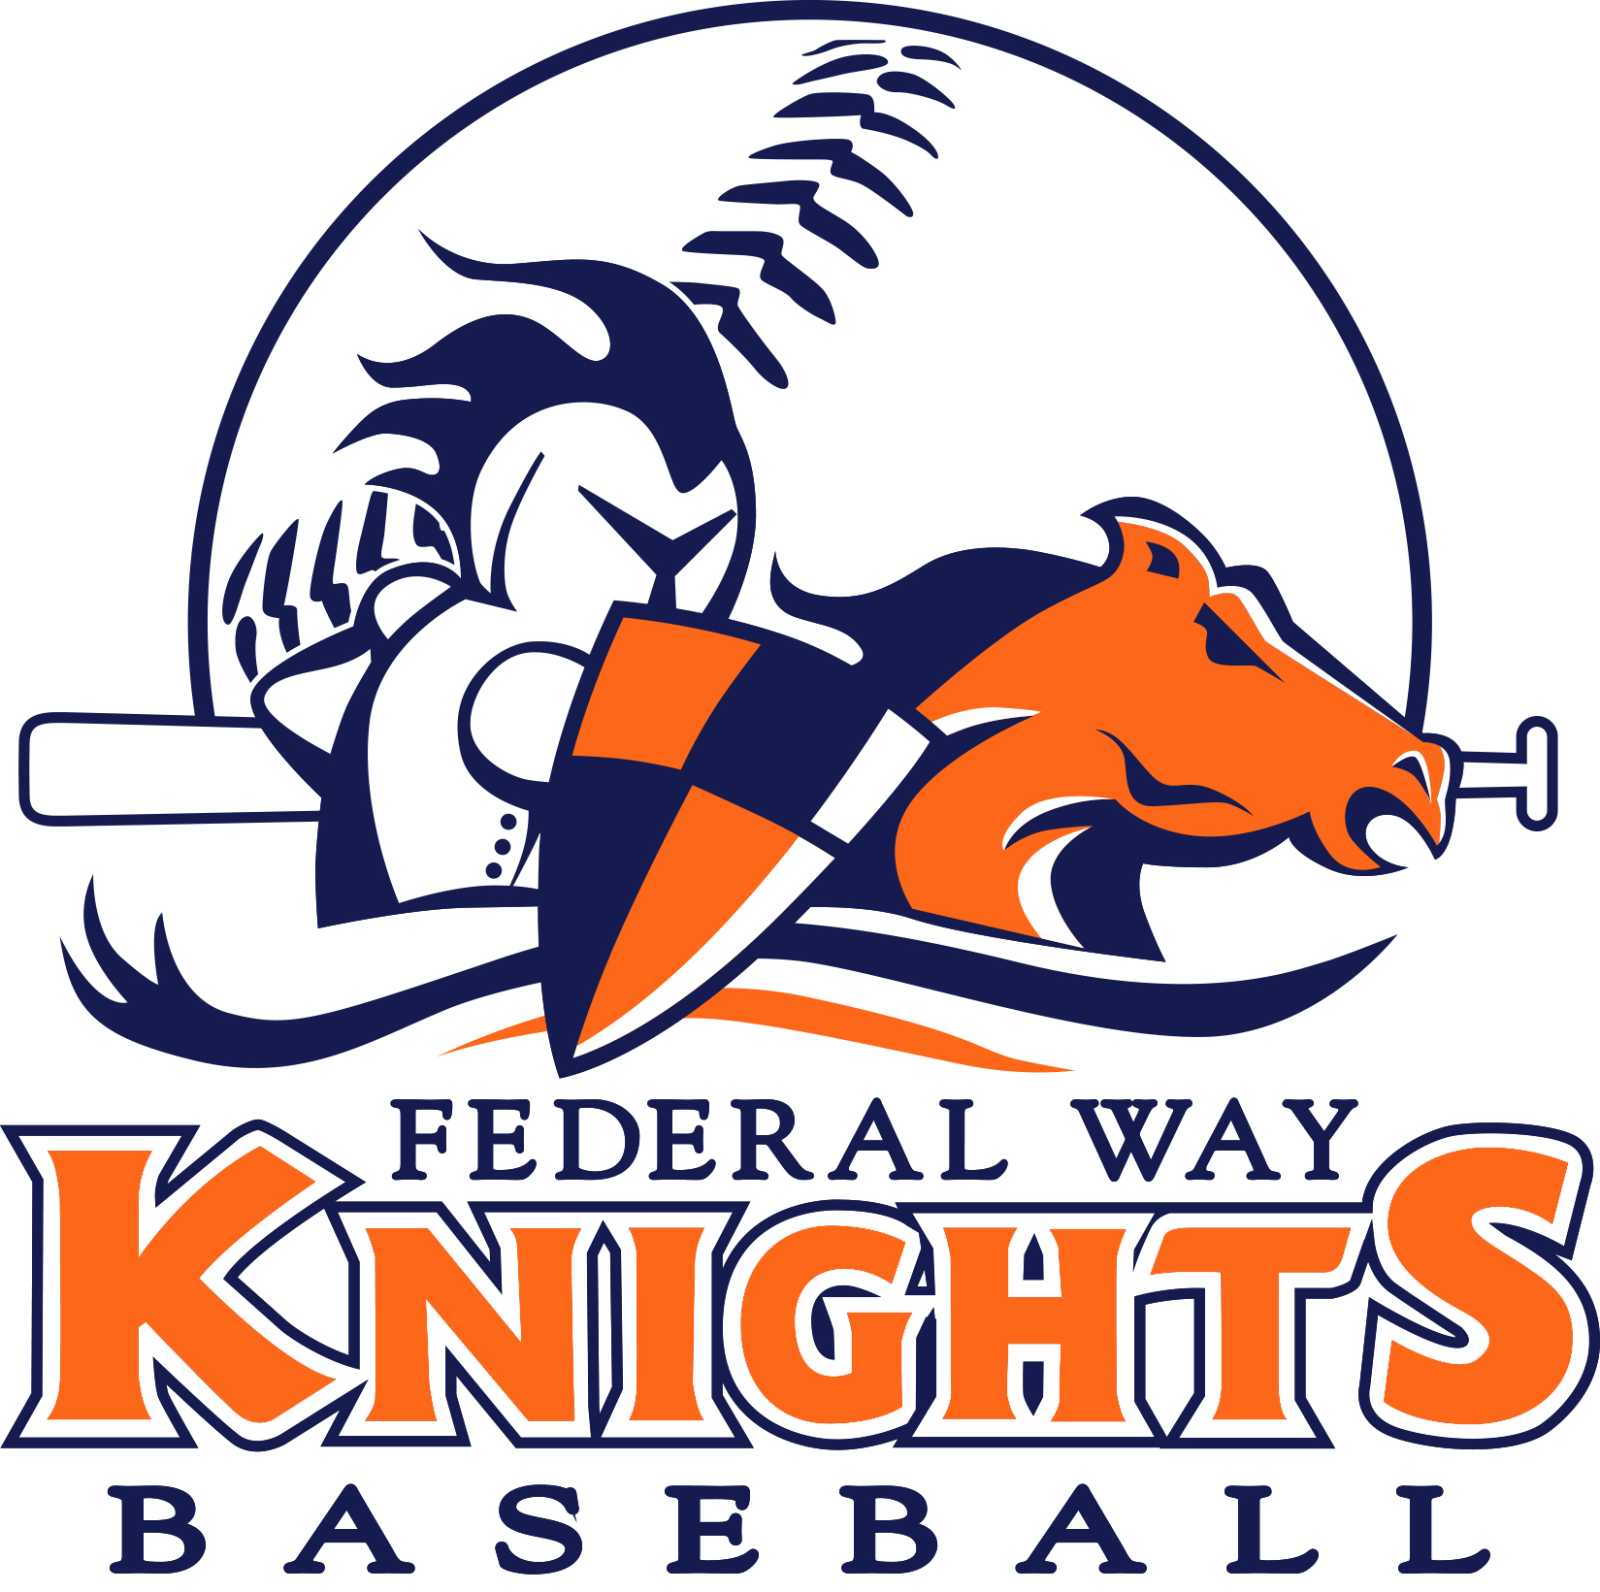 Federal Way Knights Baseball Club Baseball Youth Travel Team